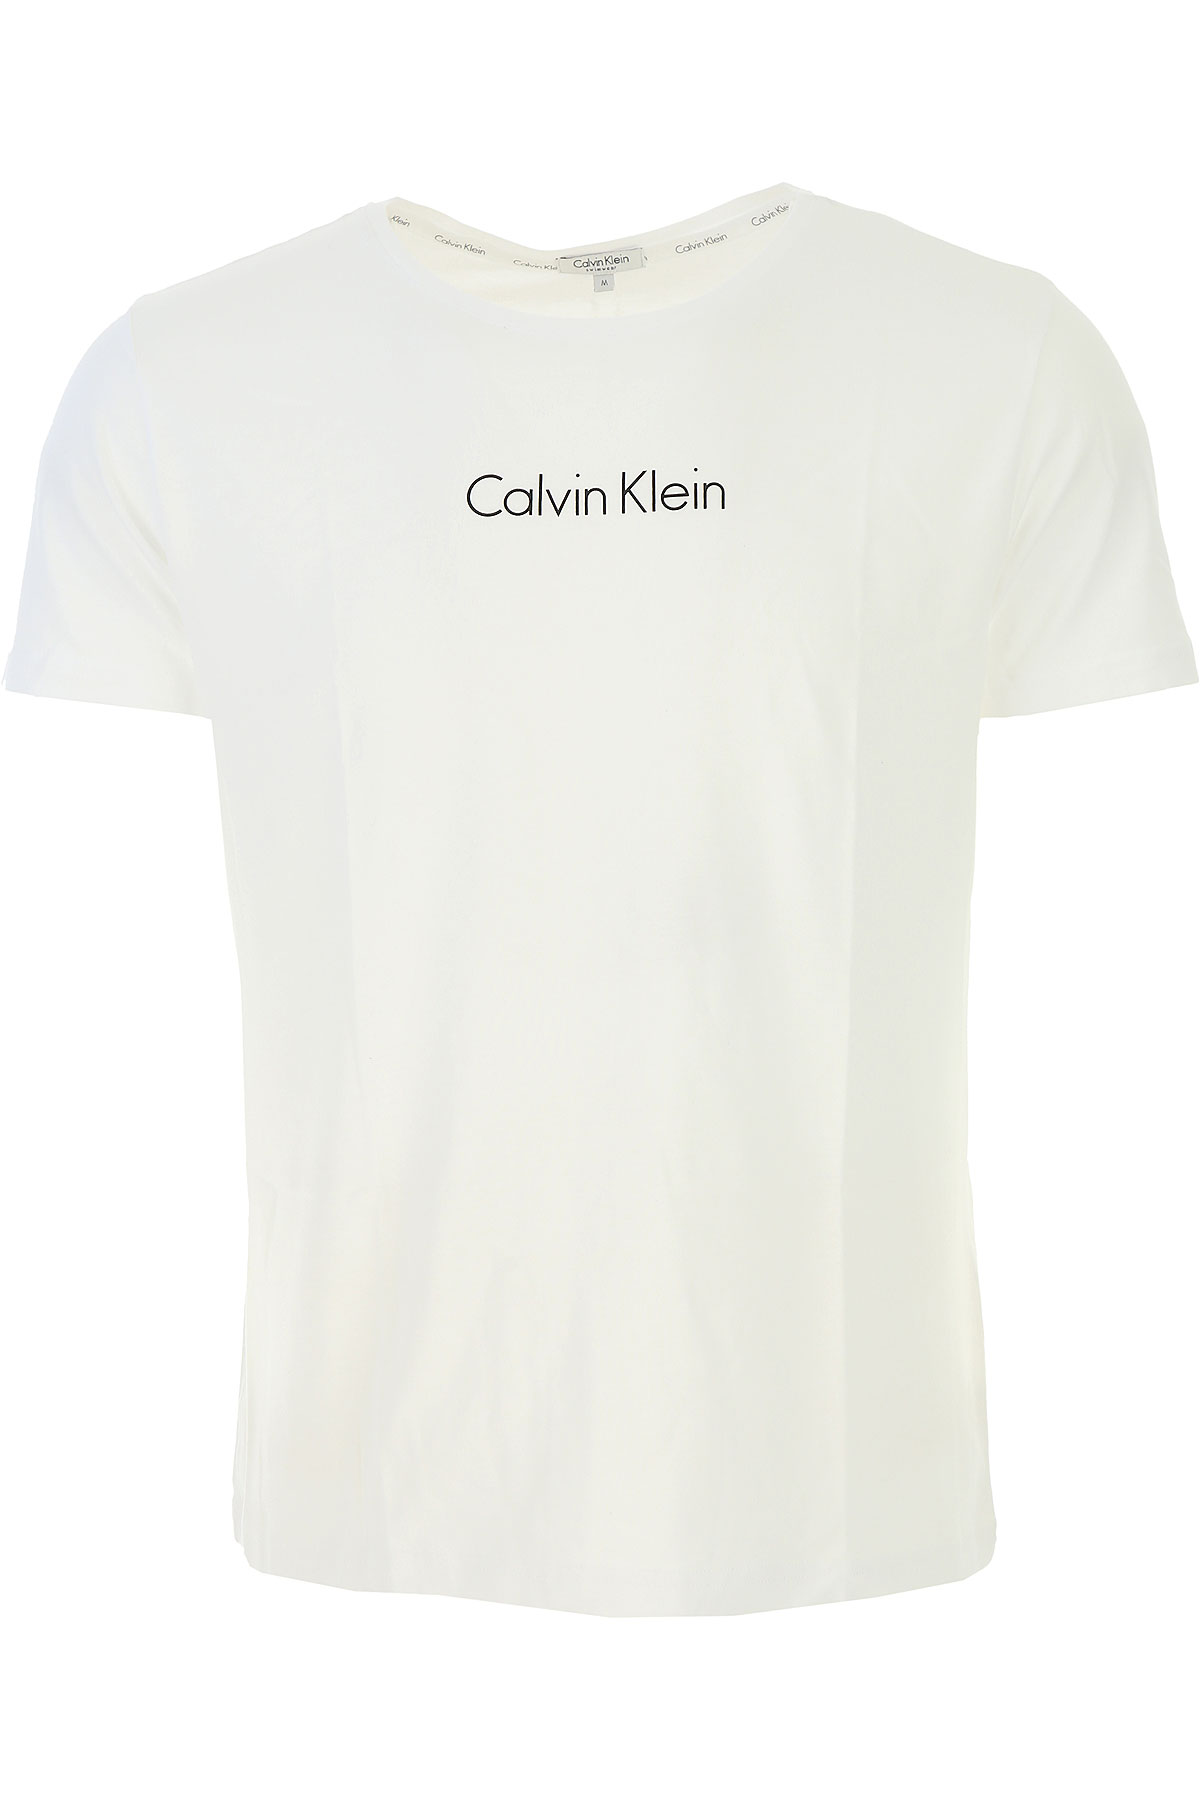 Mens Swimwear Calvin Klein, Style code: km0km00194-100-